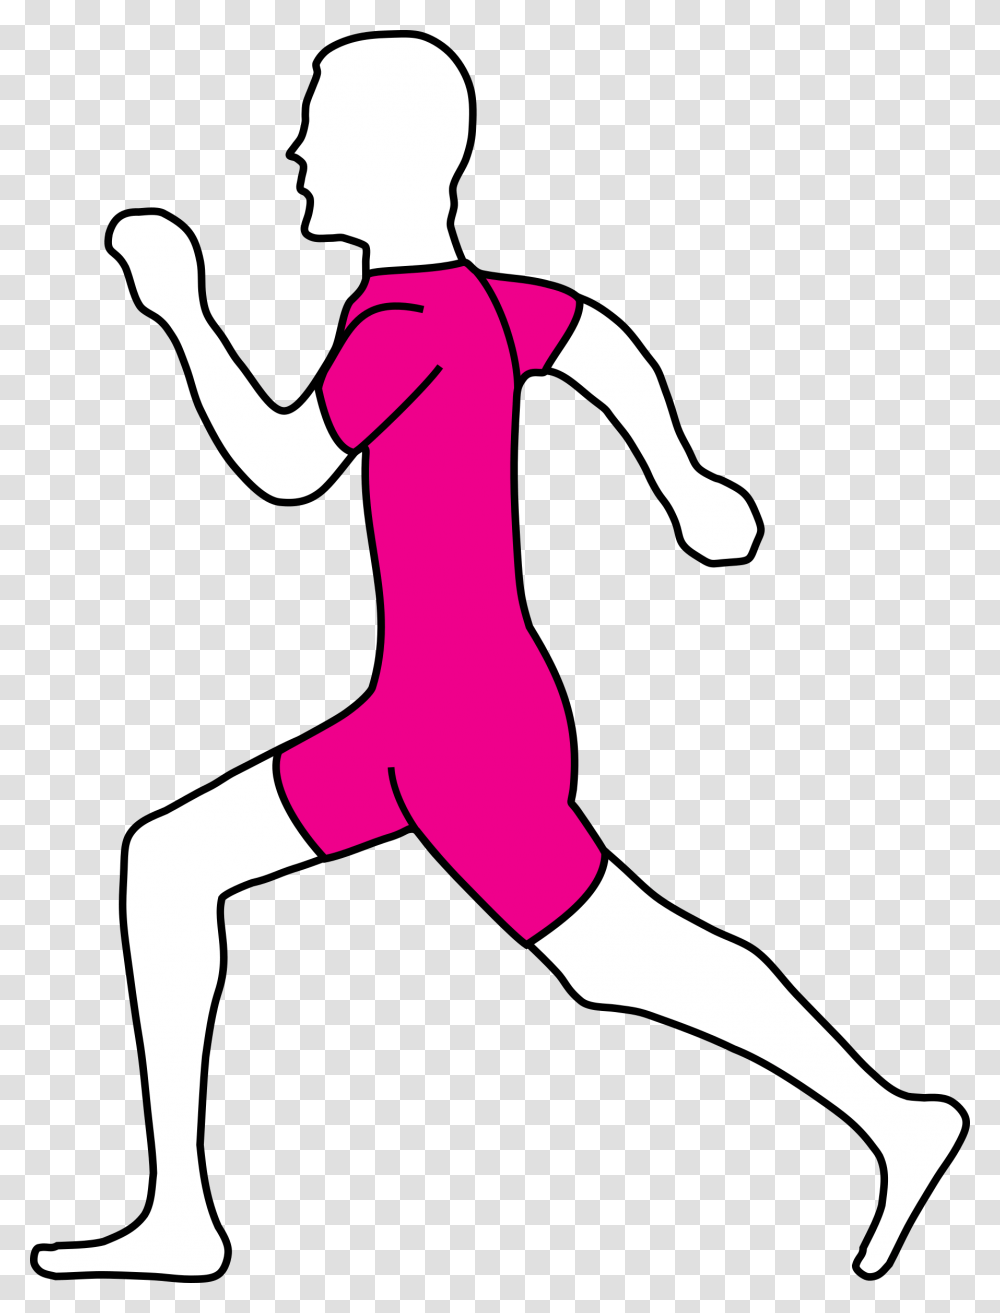 Running Man Clip Art Vector Clip Art Online Draw A People Running, Person, Dance Pose, Leisure Activities, Sport Transparent Png